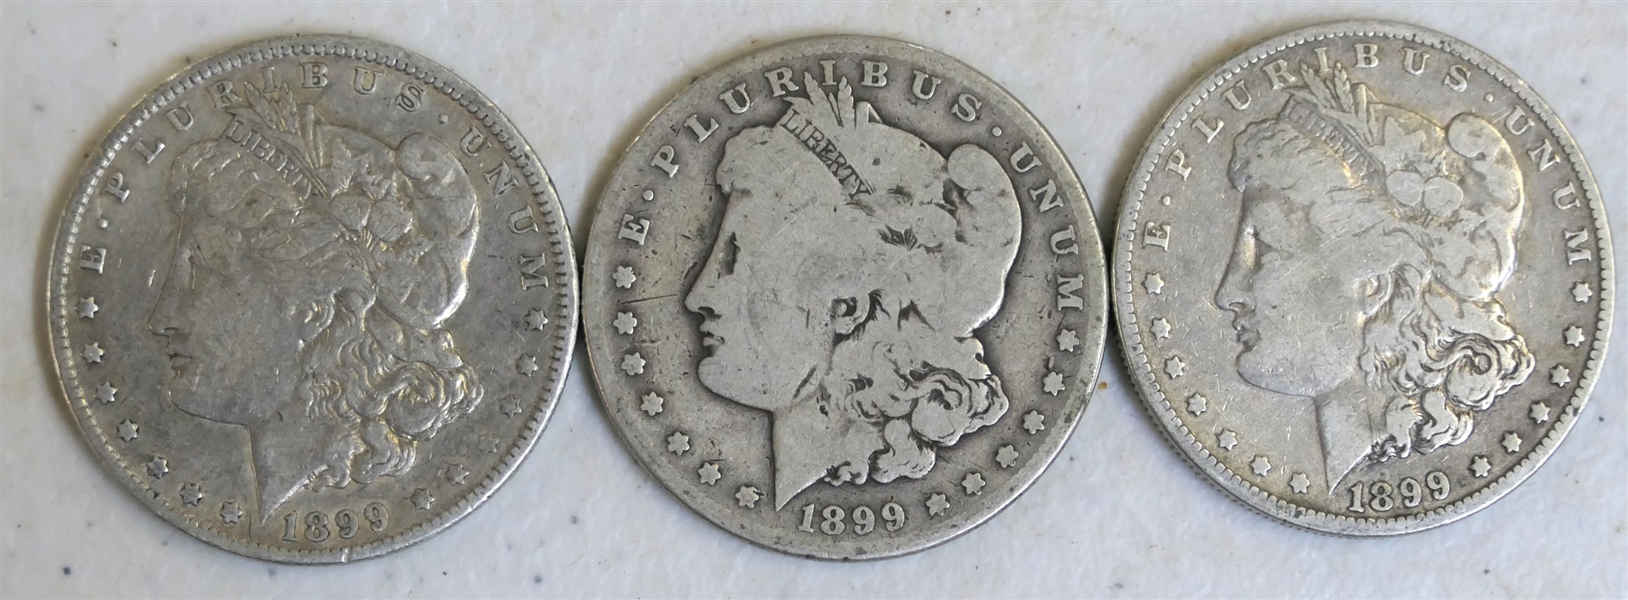 3 -1899 Morgan Silver Dollars 2 - O Mint Marks, 1 S